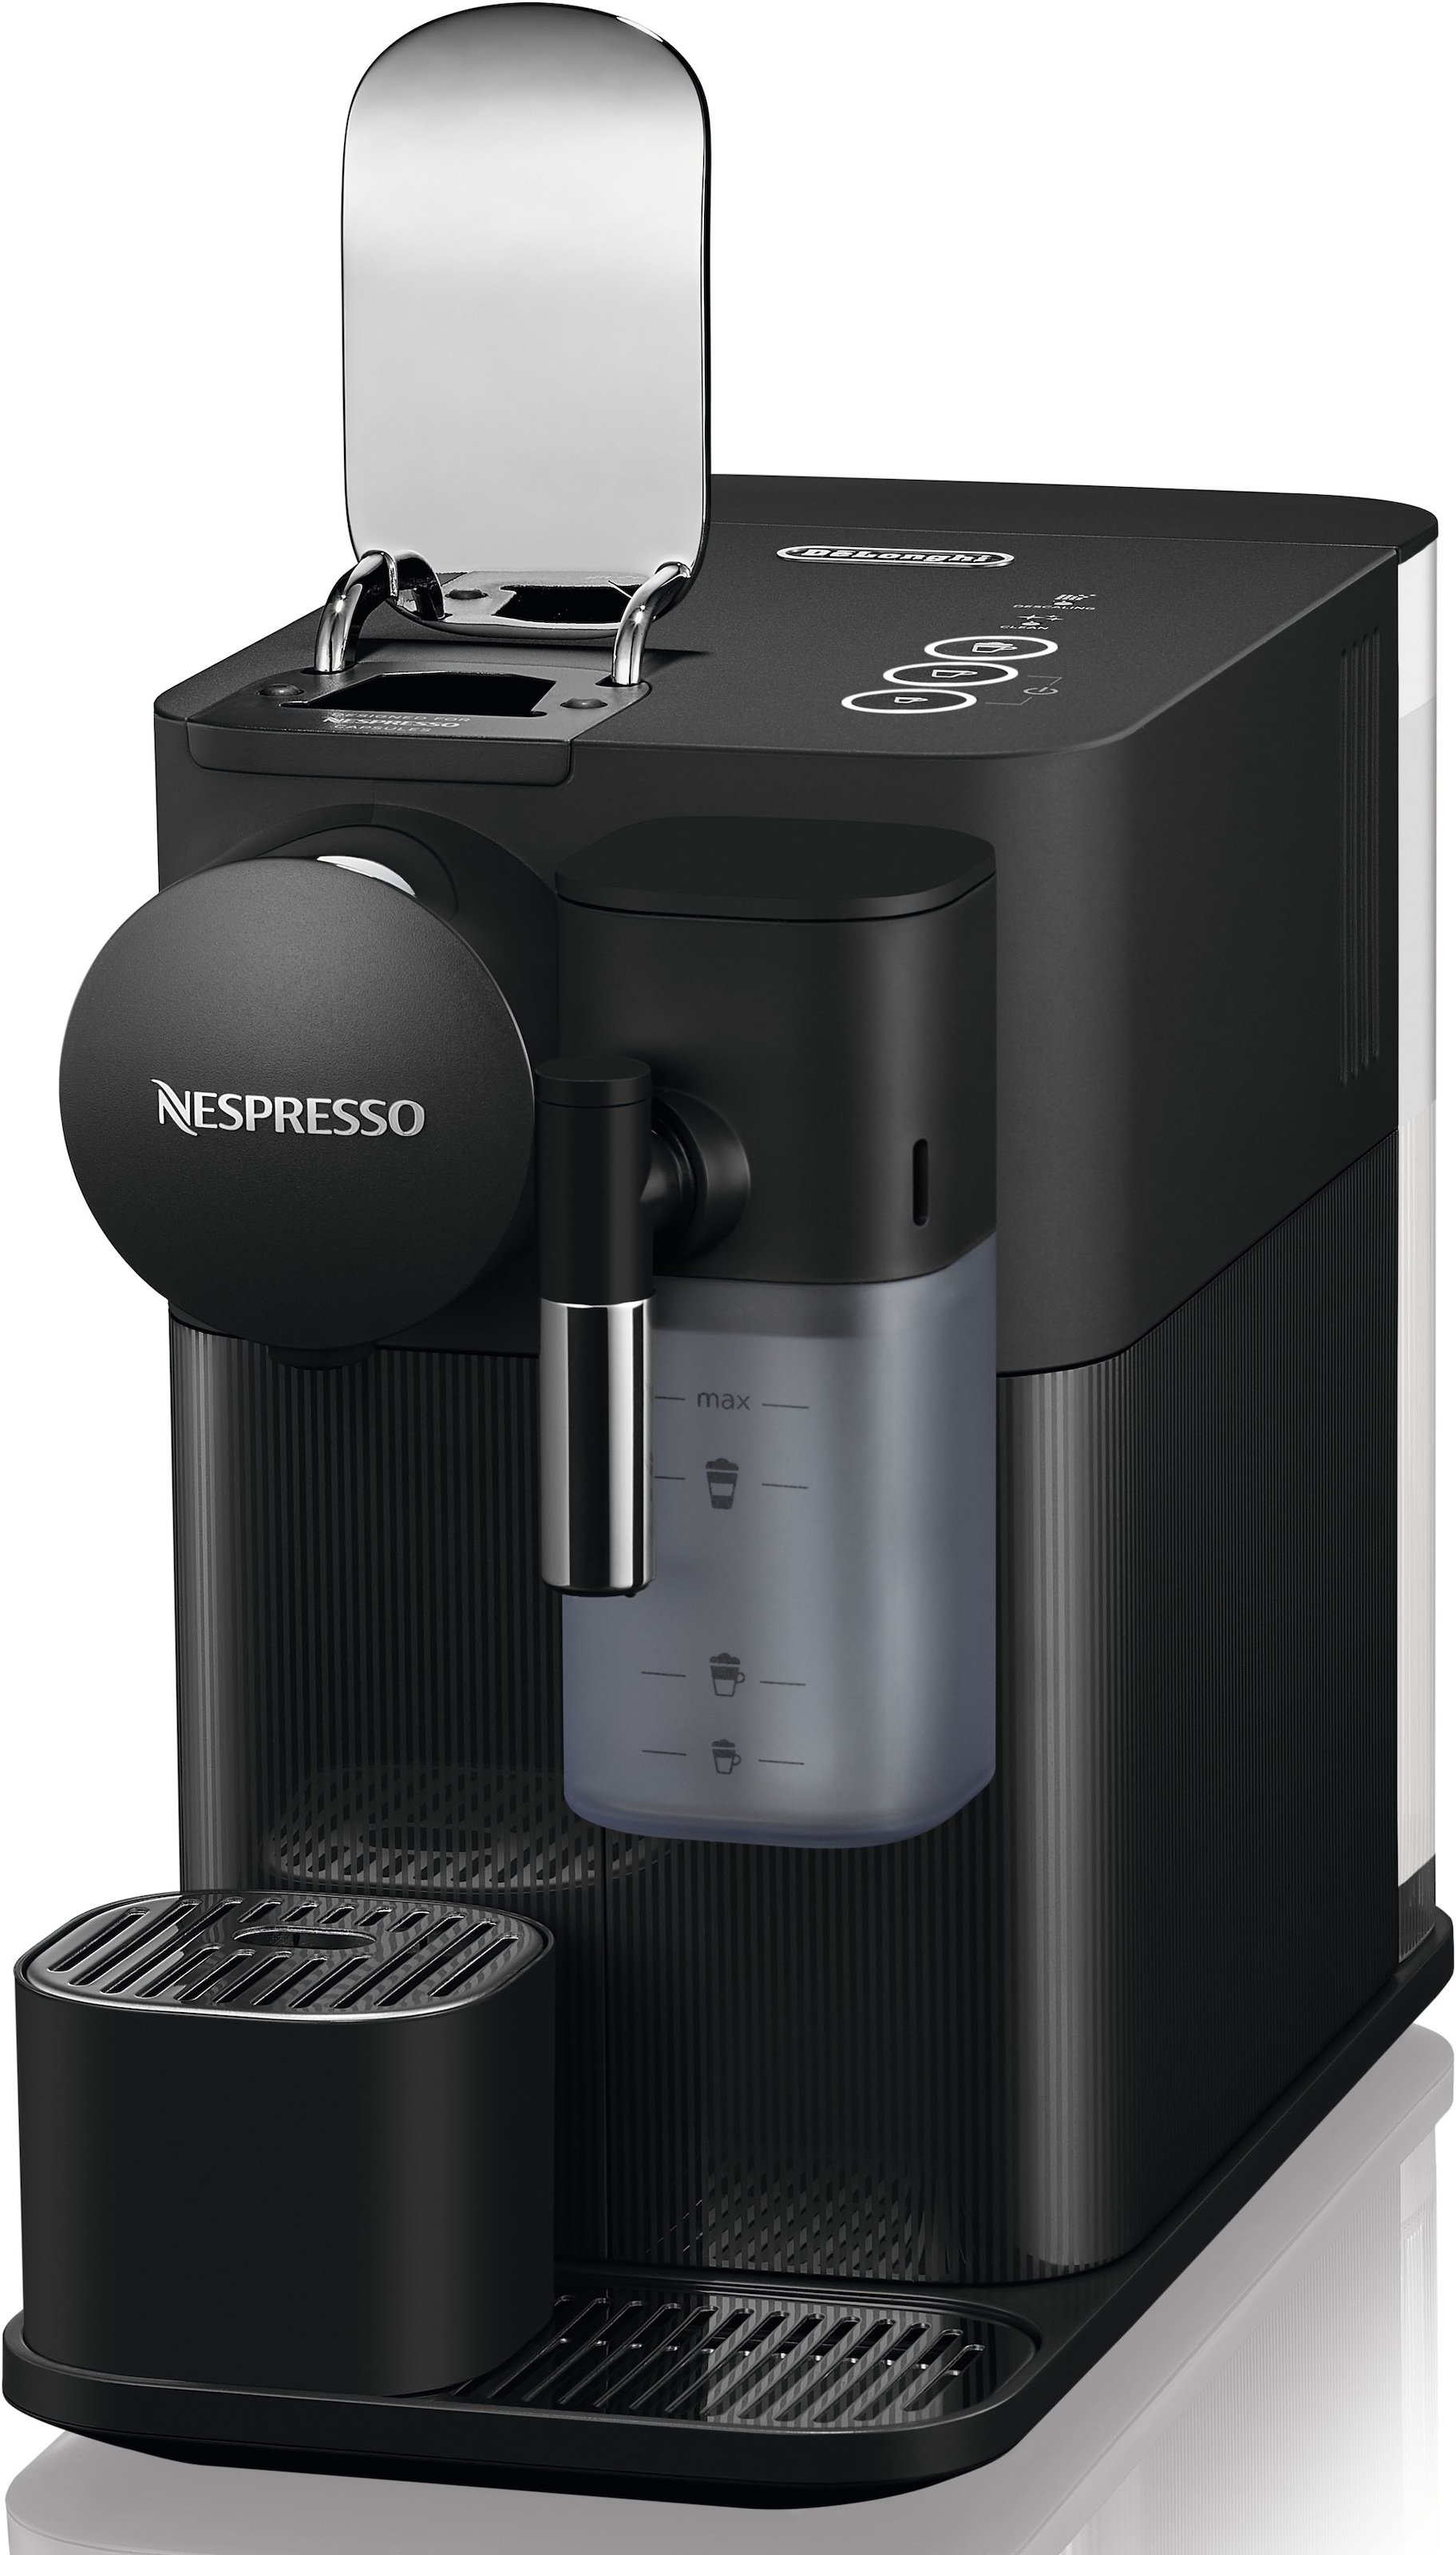 Nespresso Kapselmaschine »Lattissima One EN510.B von DeLonghi, Black«, inkl. Willkommenspaket mit 7 Kapseln